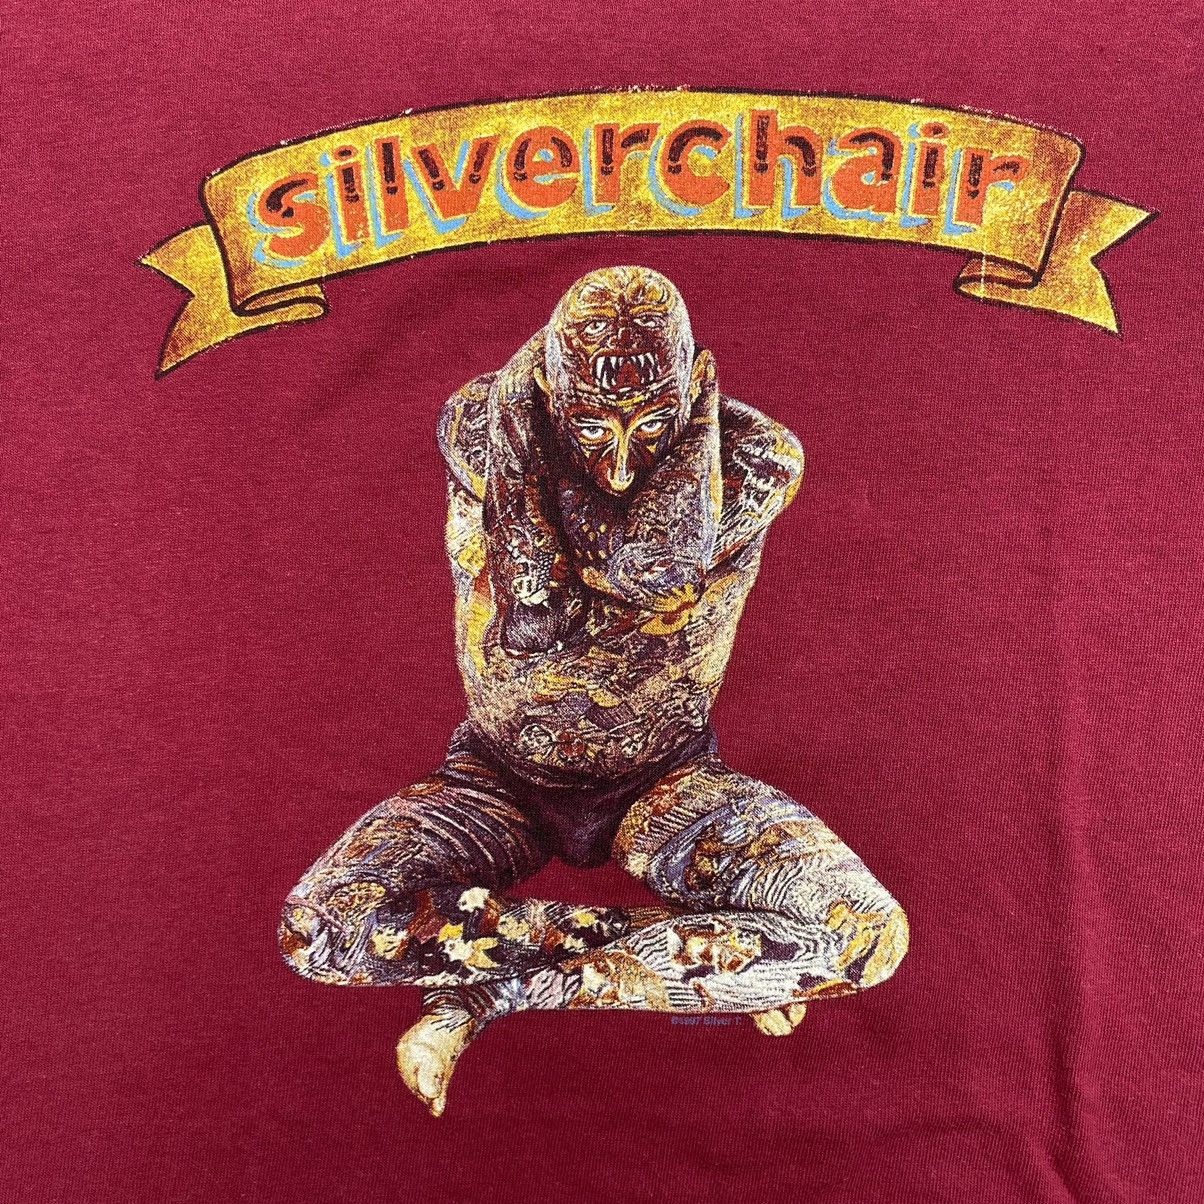 Vintage Silverchair Freak Show 1997 - 2